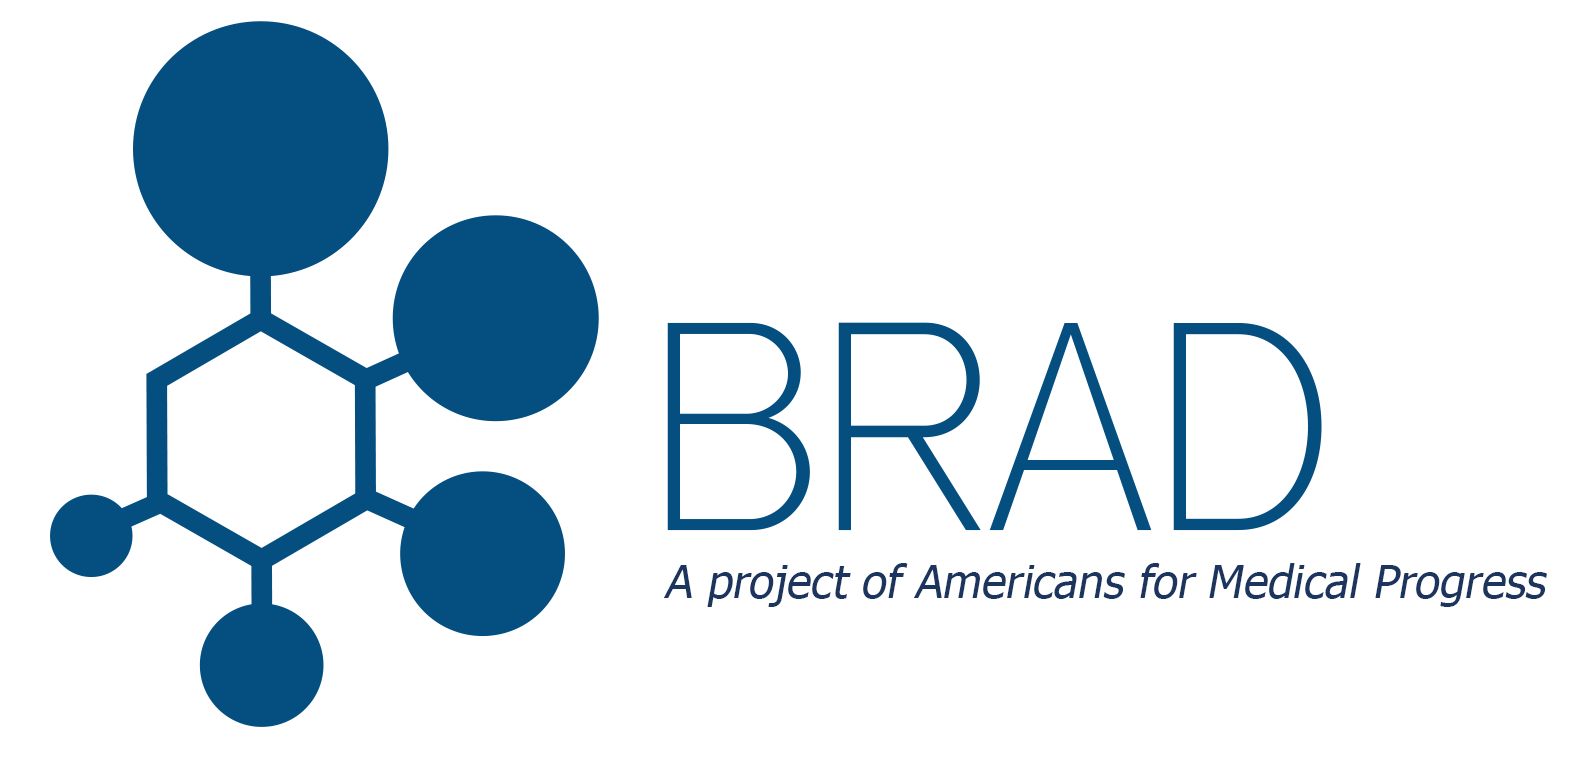 Brad Logo - BRAD Logo with AMP - Americans for Medical Progress